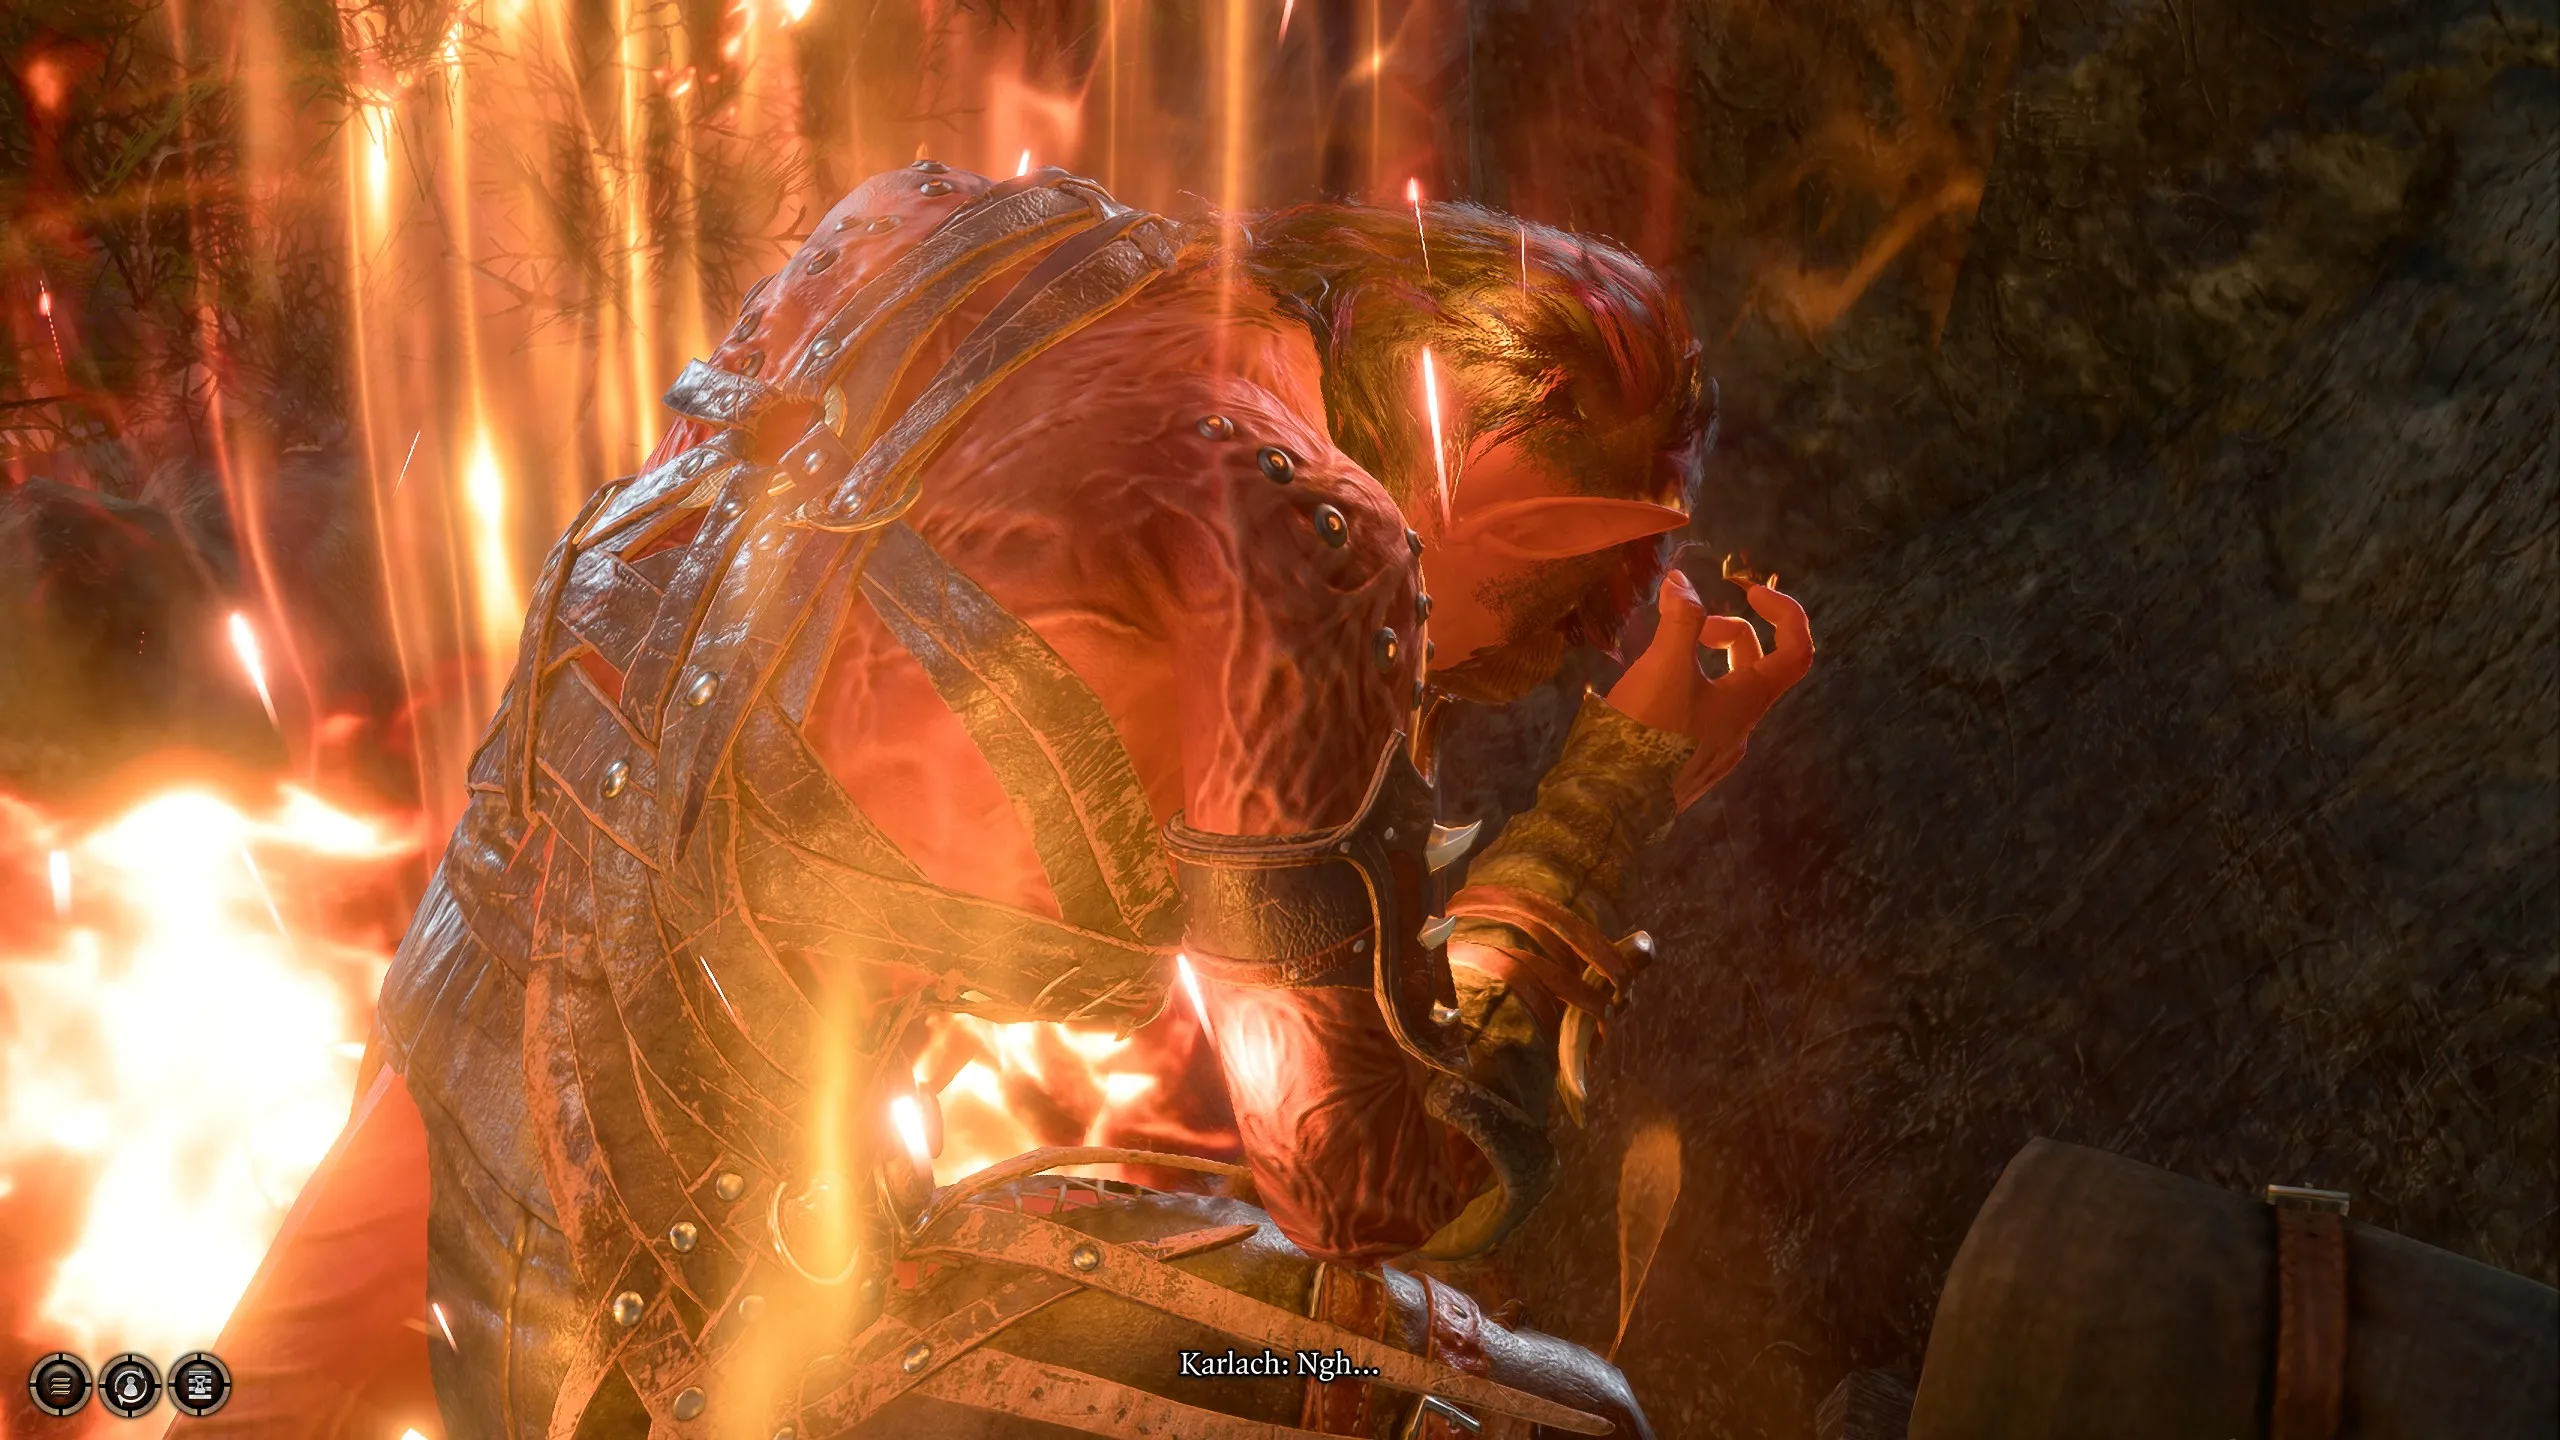 The companion Karlach burning up during a Baldur's Gate 3 cutscene.